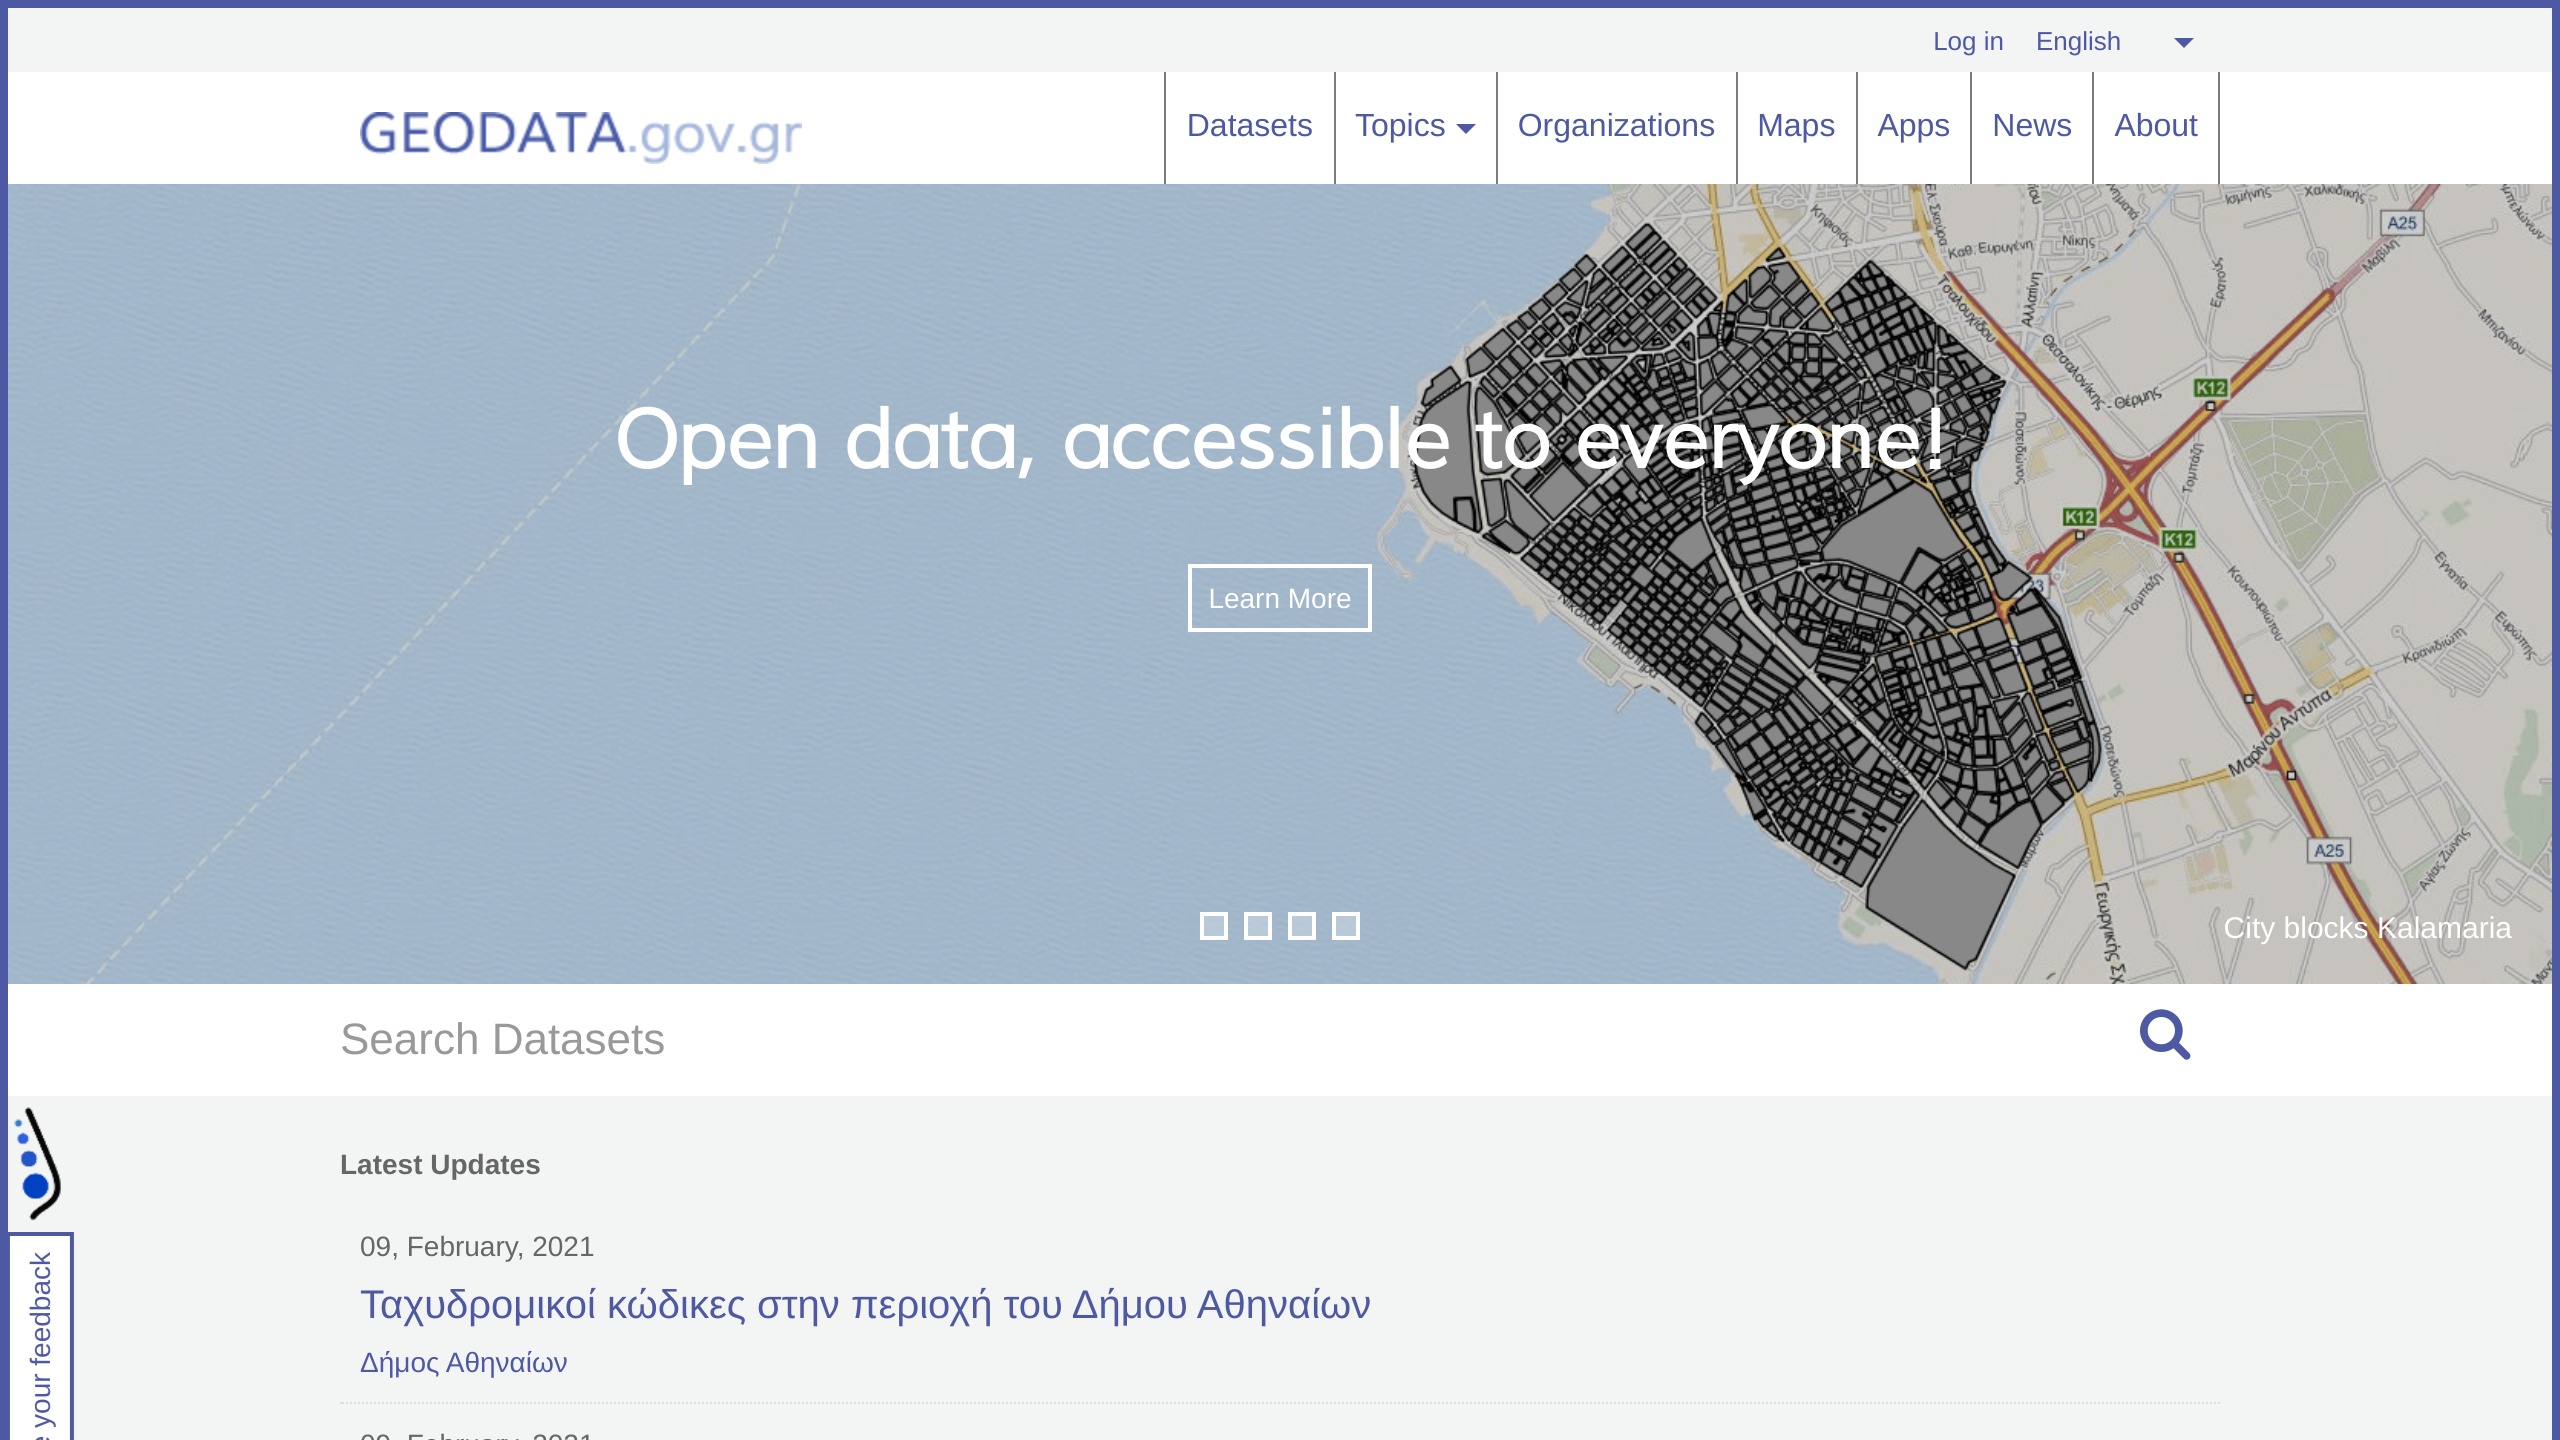 Geodata.gov.gr's website screenshot